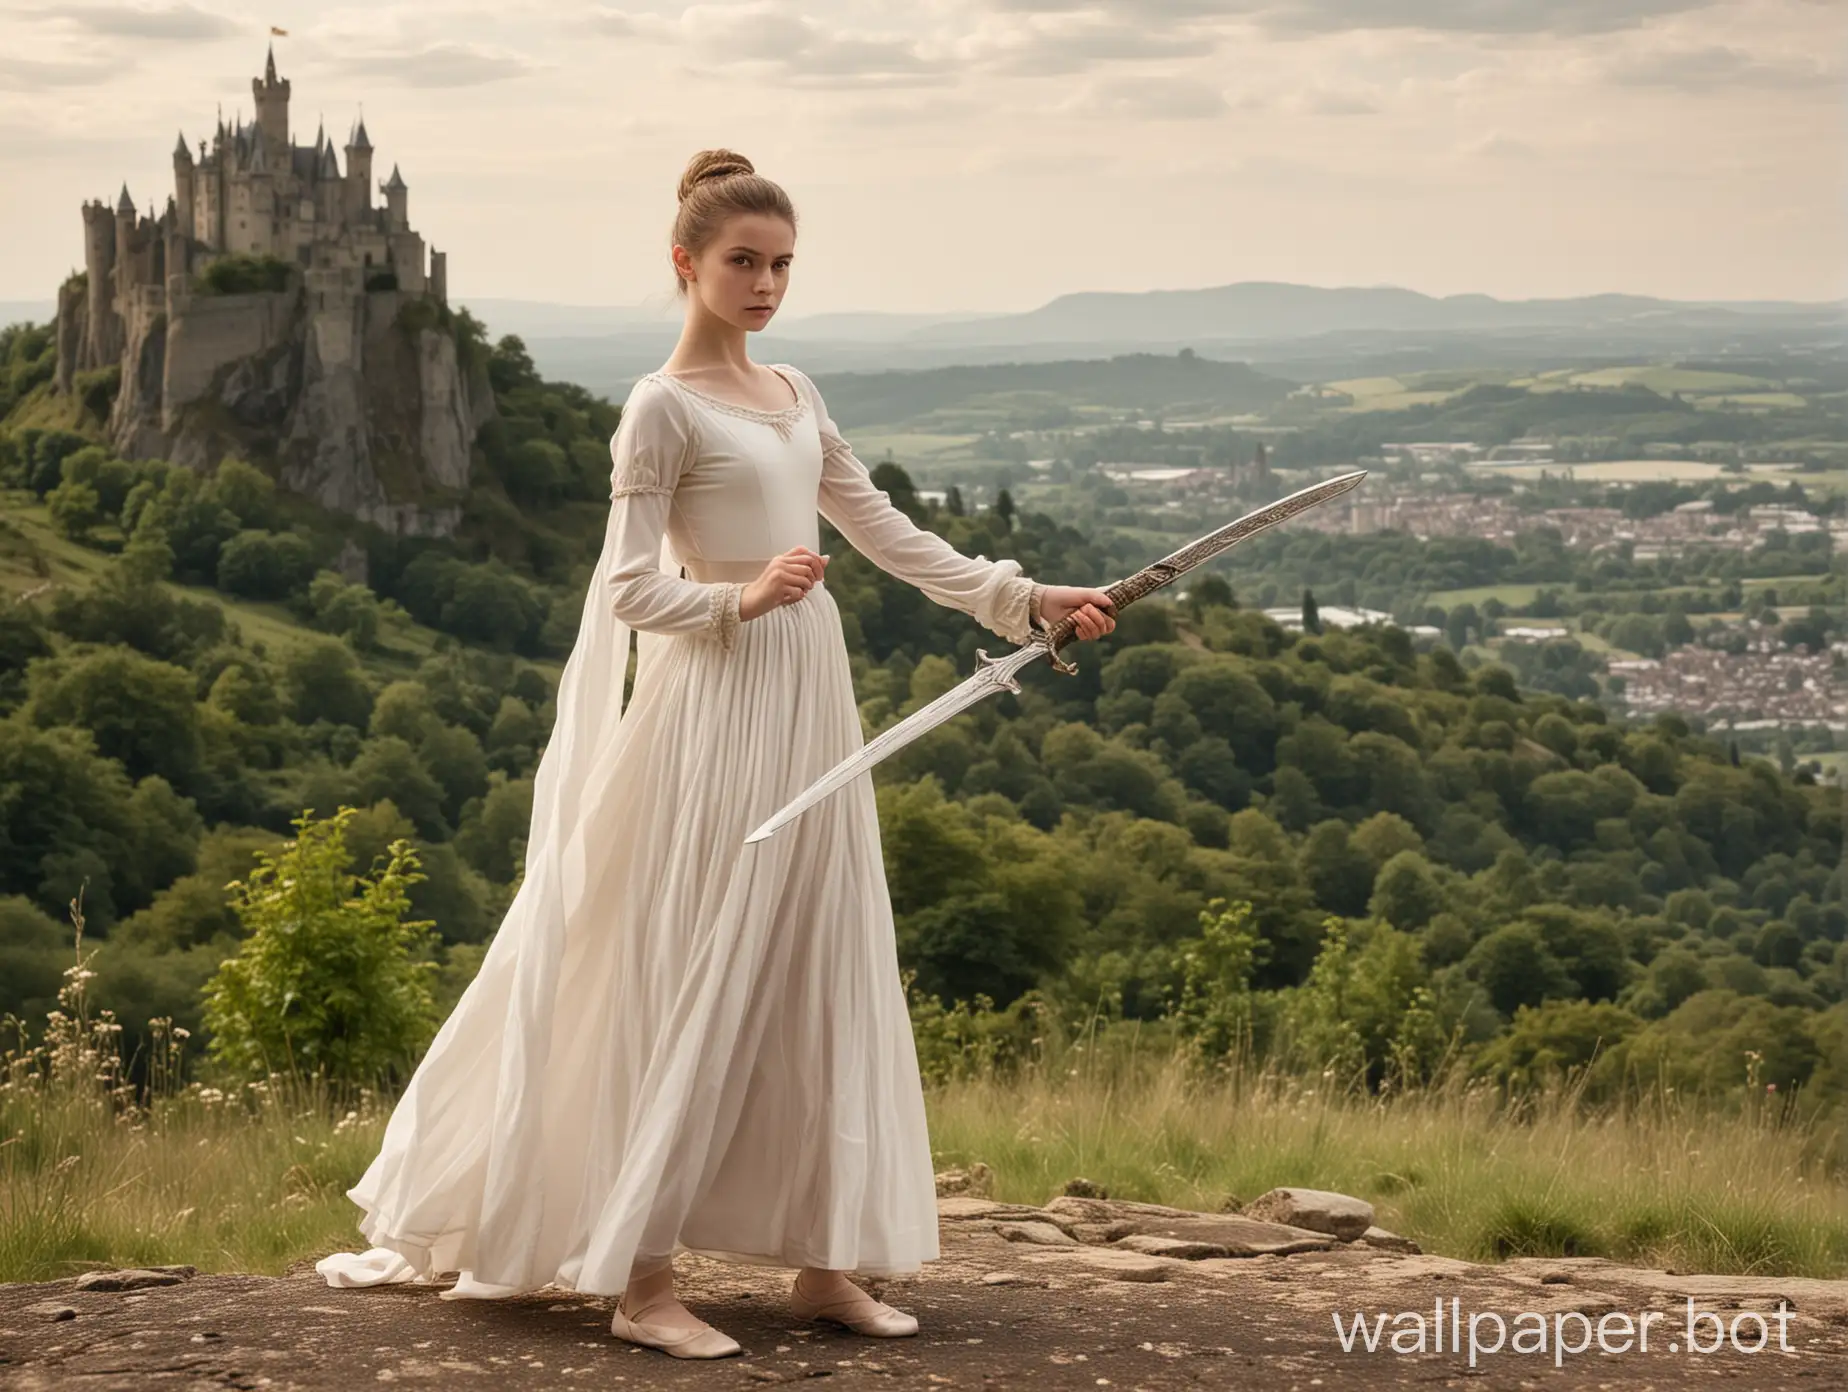 Fantasy-Swordswoman-and-Young-Ballerina-at-Castle-Overlook